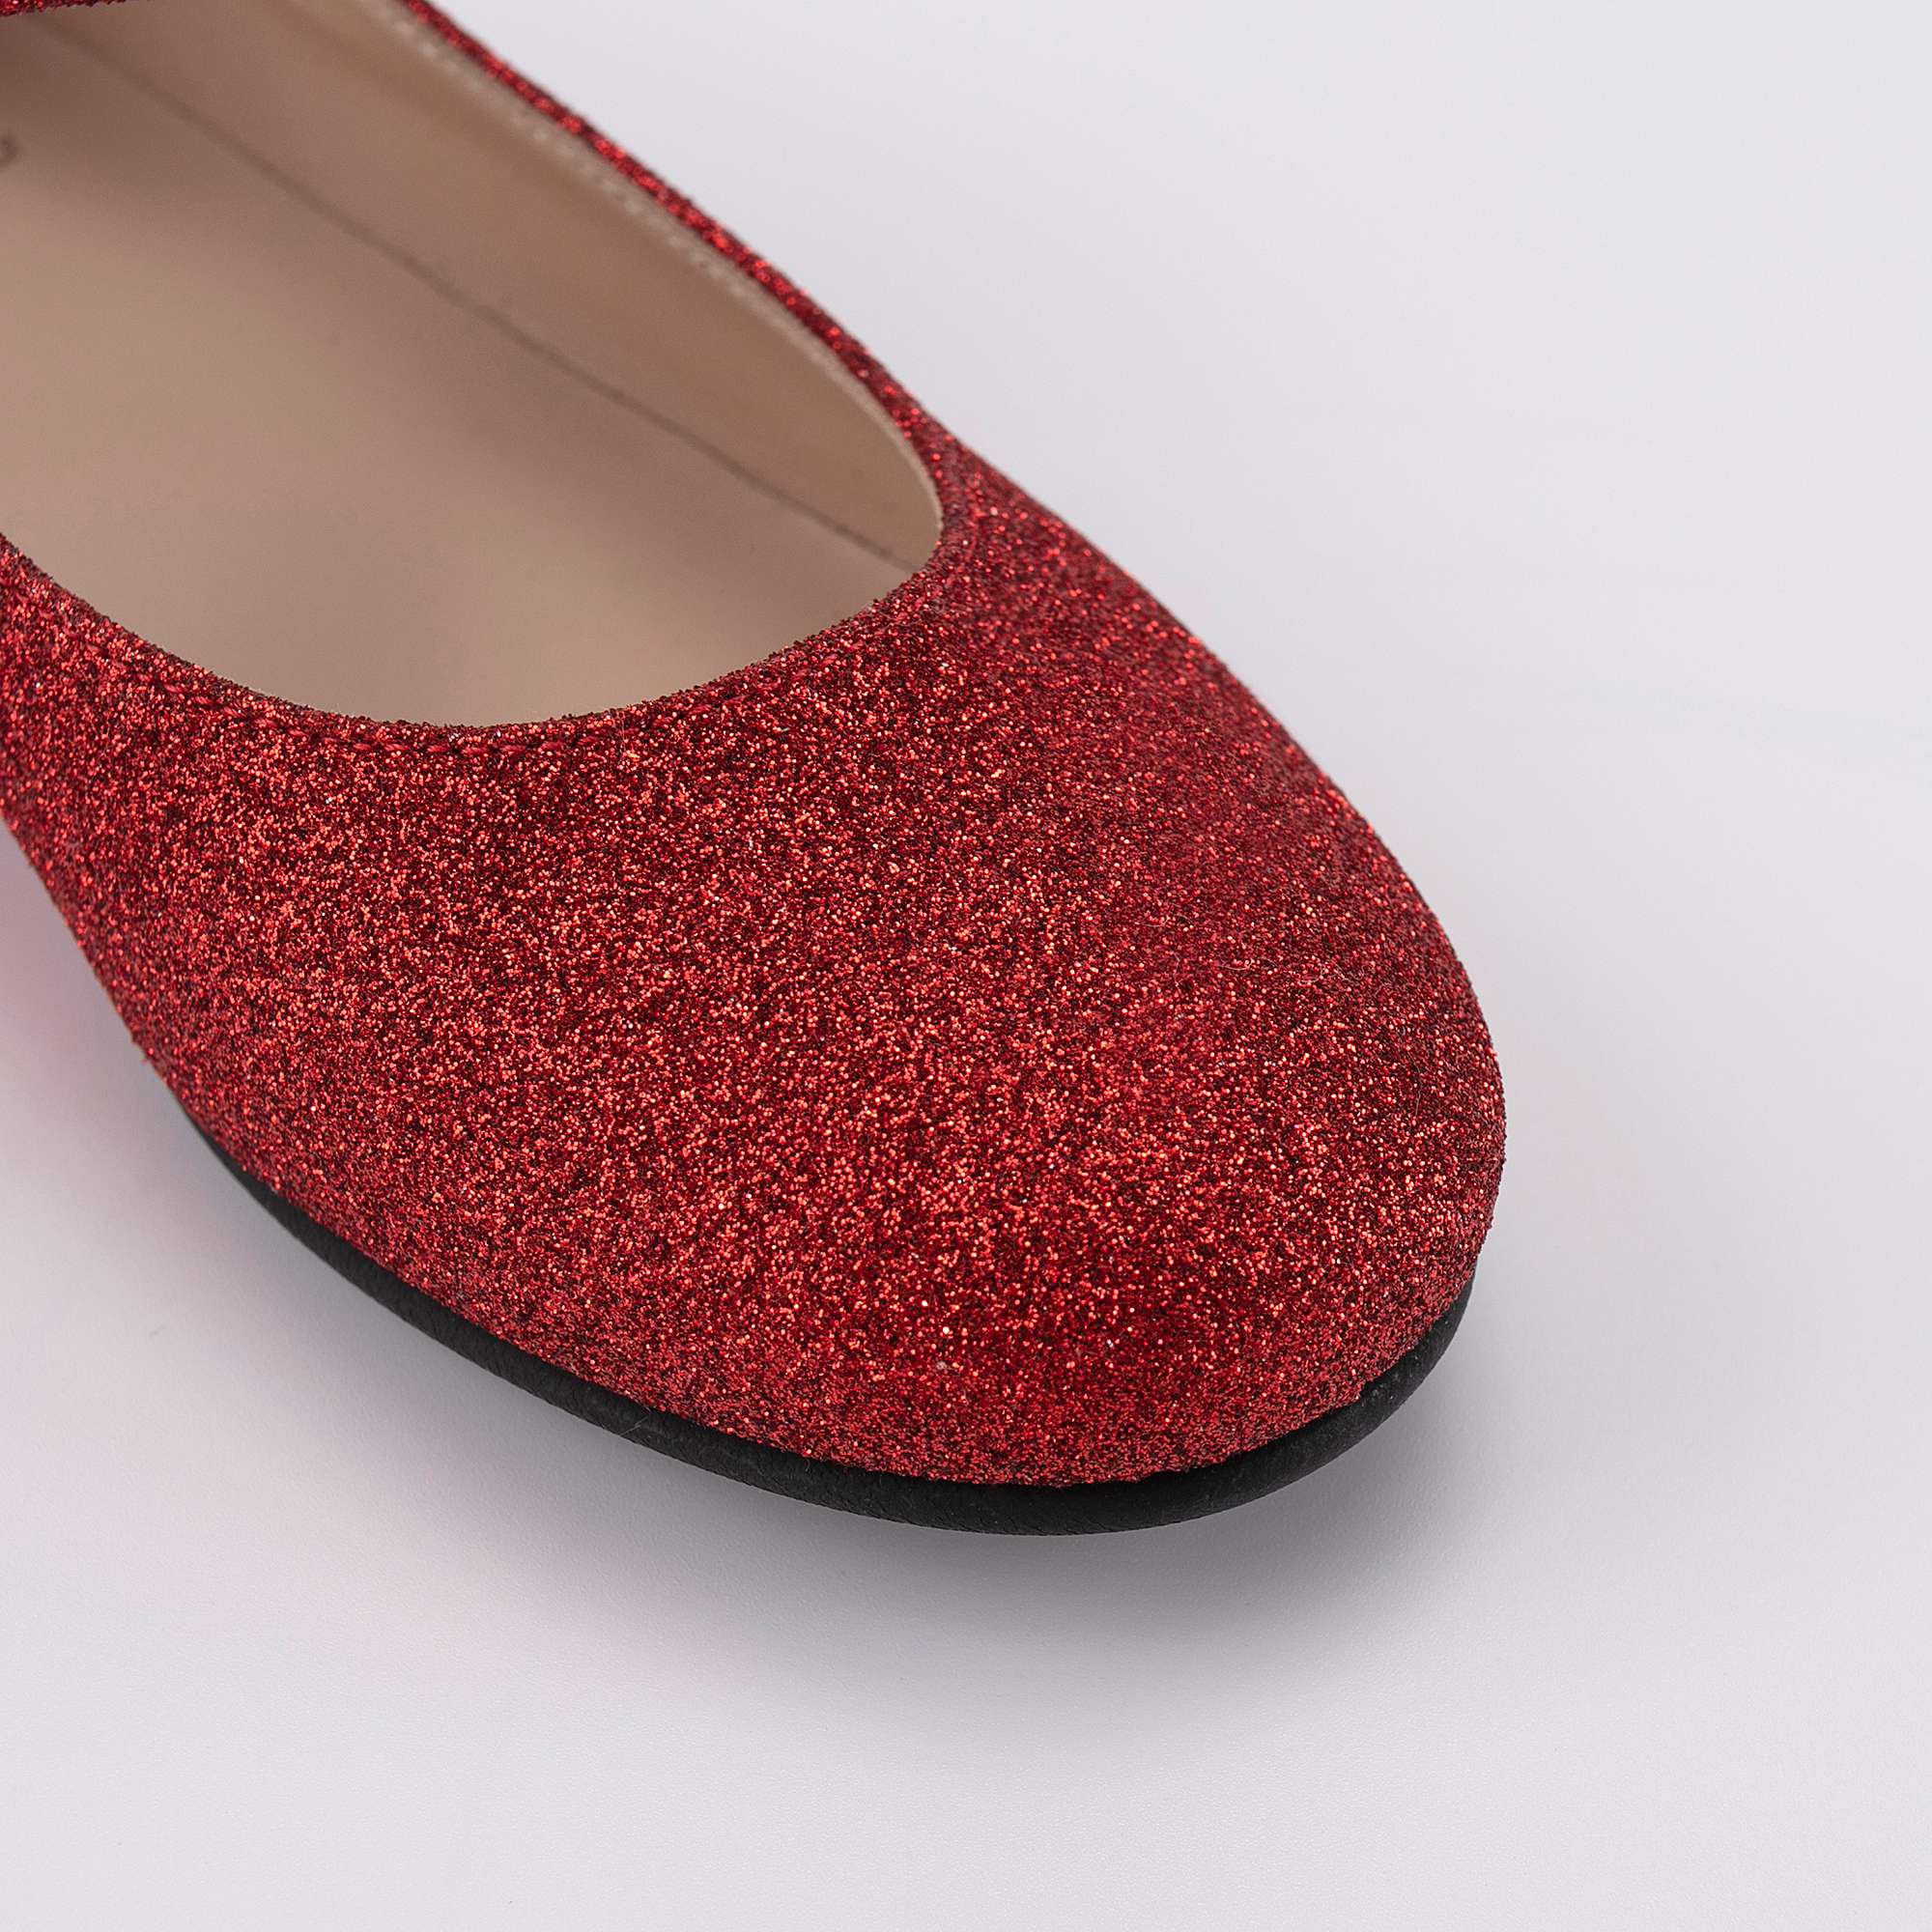 Girls Red Glitter Flat Shoes